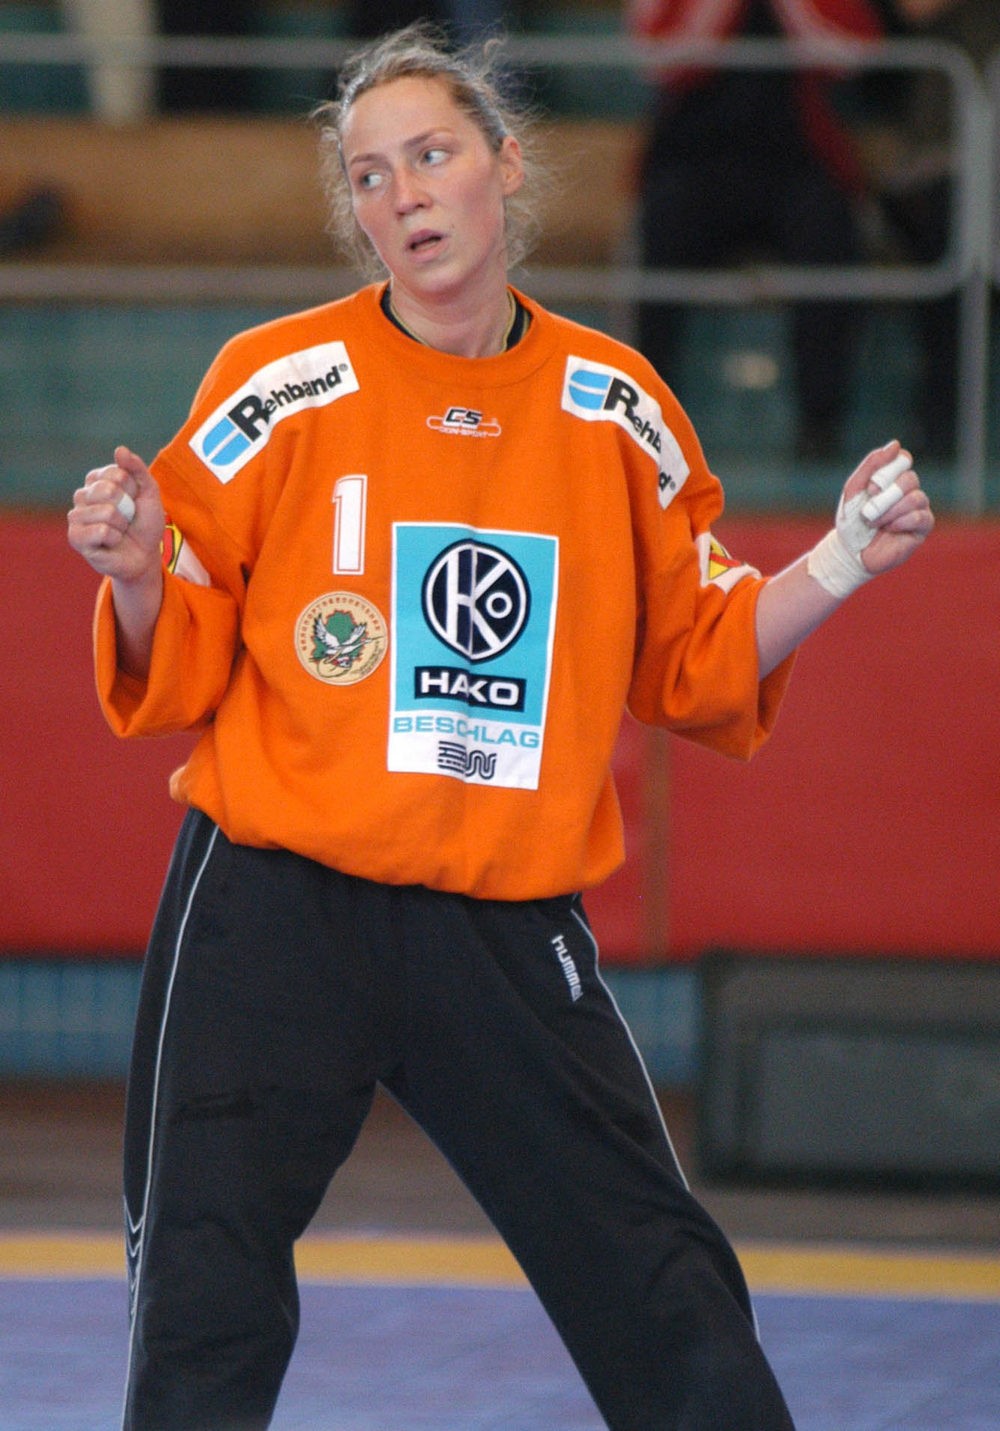 Natalia Petrakova, Belarus handdball player